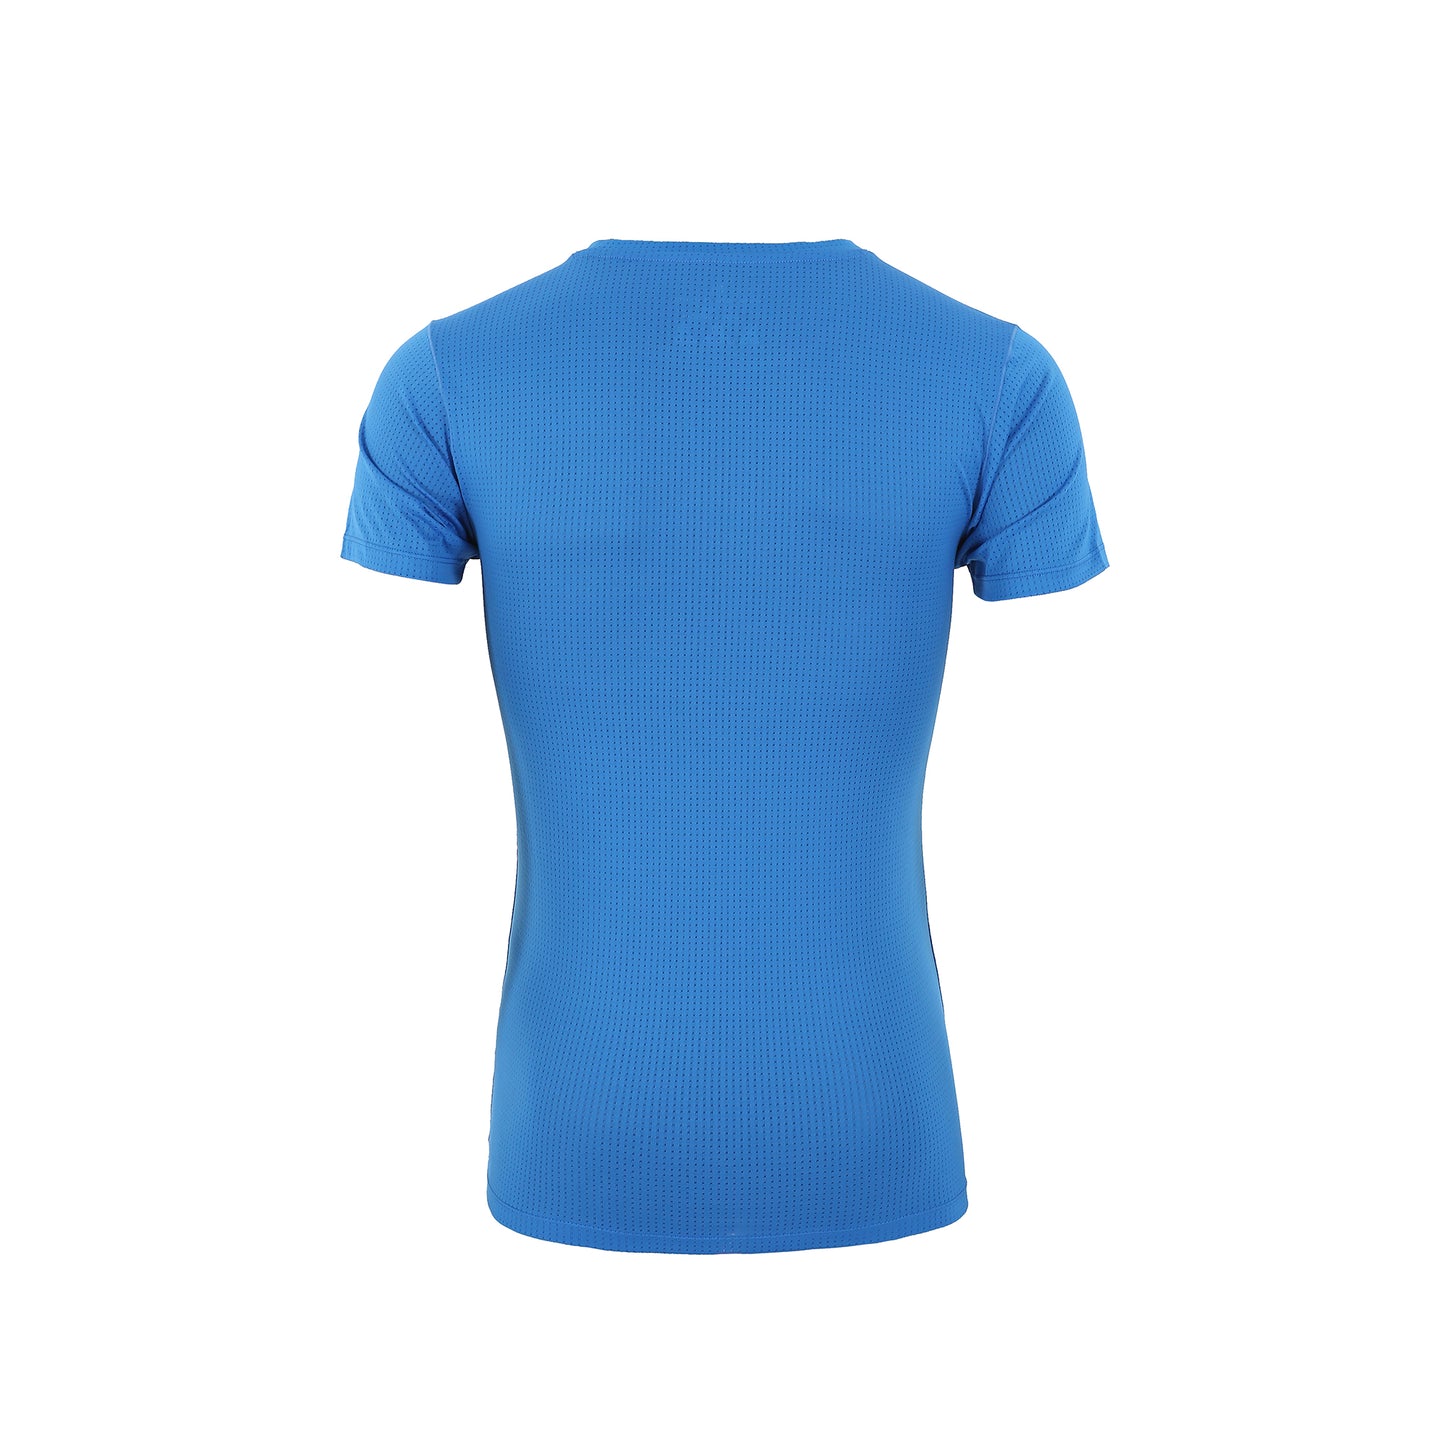 Dry Apparels TNO – Men\'sWorkout L.Blue Short Top Sleeve Fit